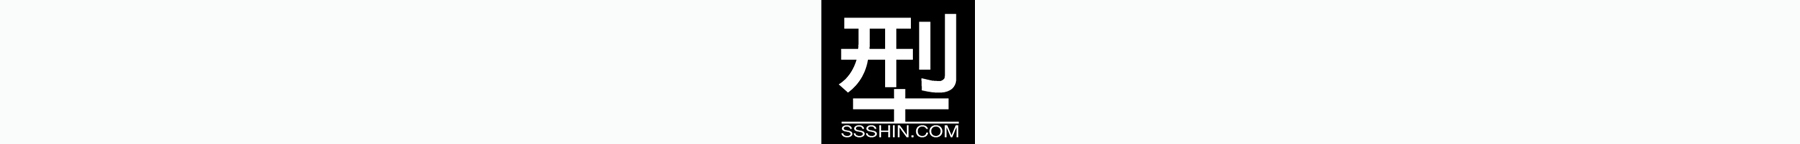 ssshindotcom_logo